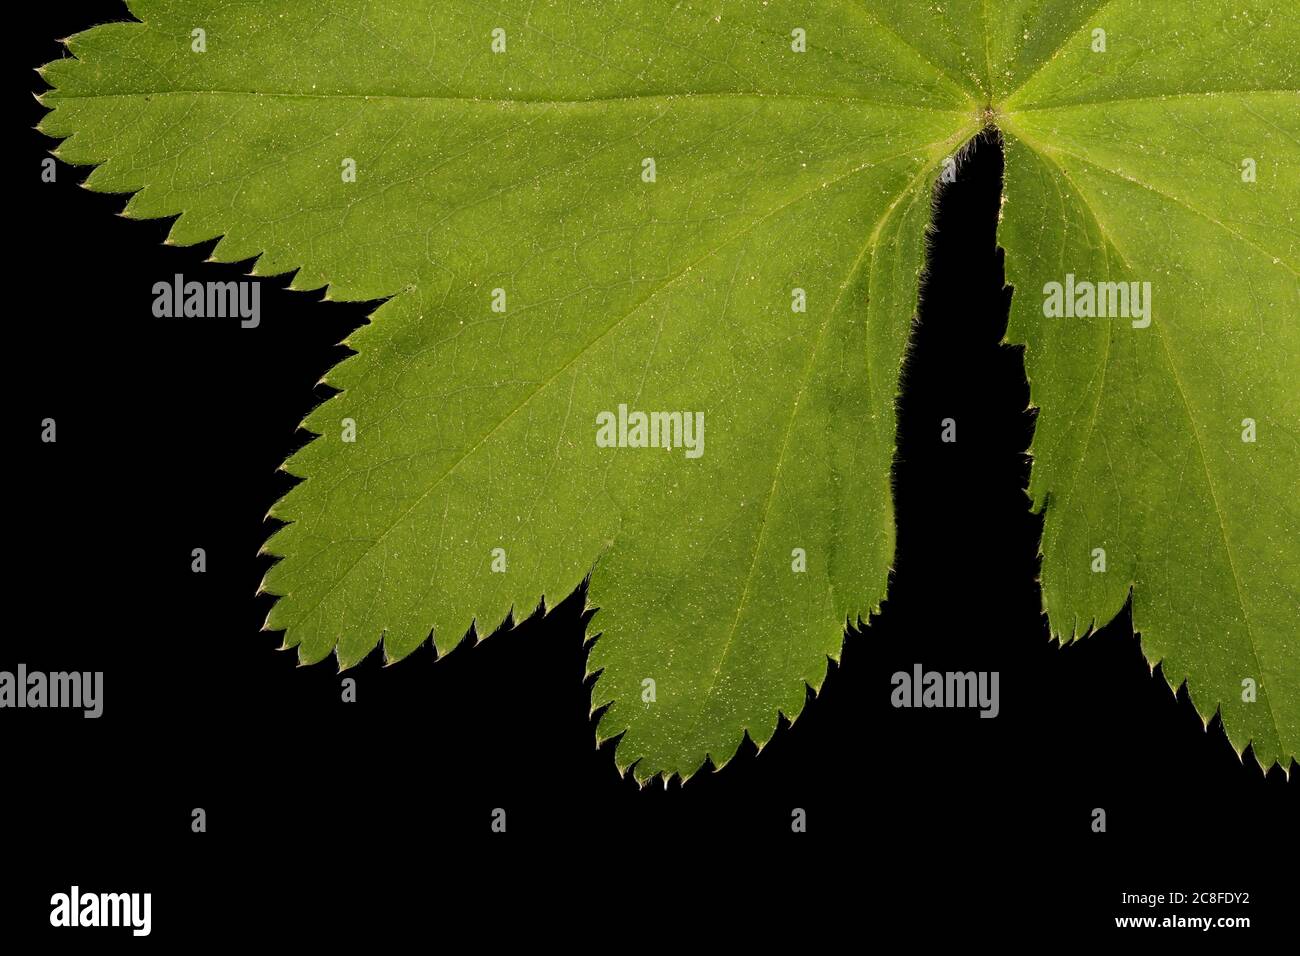 Common Lady's Mantle (Alchemilla vulgaris). Leaf Detail Closeup Stock Photo